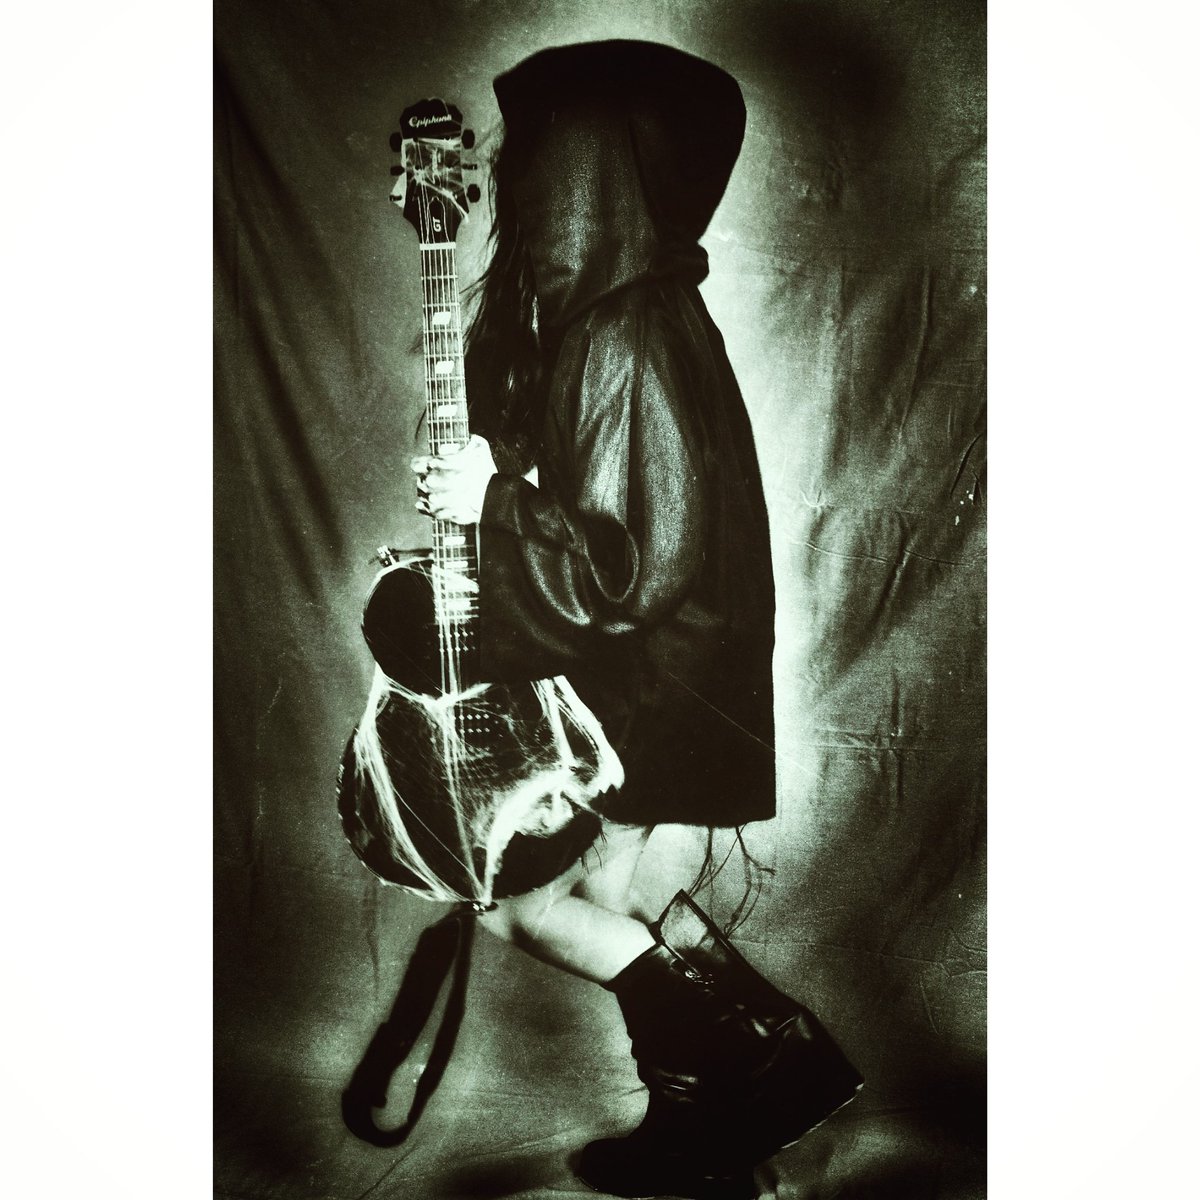 Part of the Joan Of Arc Coven

#WitchesOfLondon
#DebutAlbum
#CamdenGothic

Listen on spotify······link in bio
🌙🌙🌙

open.spotify.com/artist/5ekb32f…

#guitarplayer
#epiphone
#epiphoneguitars
#rock #rockband
#witches #darkness #darkart #darkrock #witchmetal
#music #lambsoflucifer